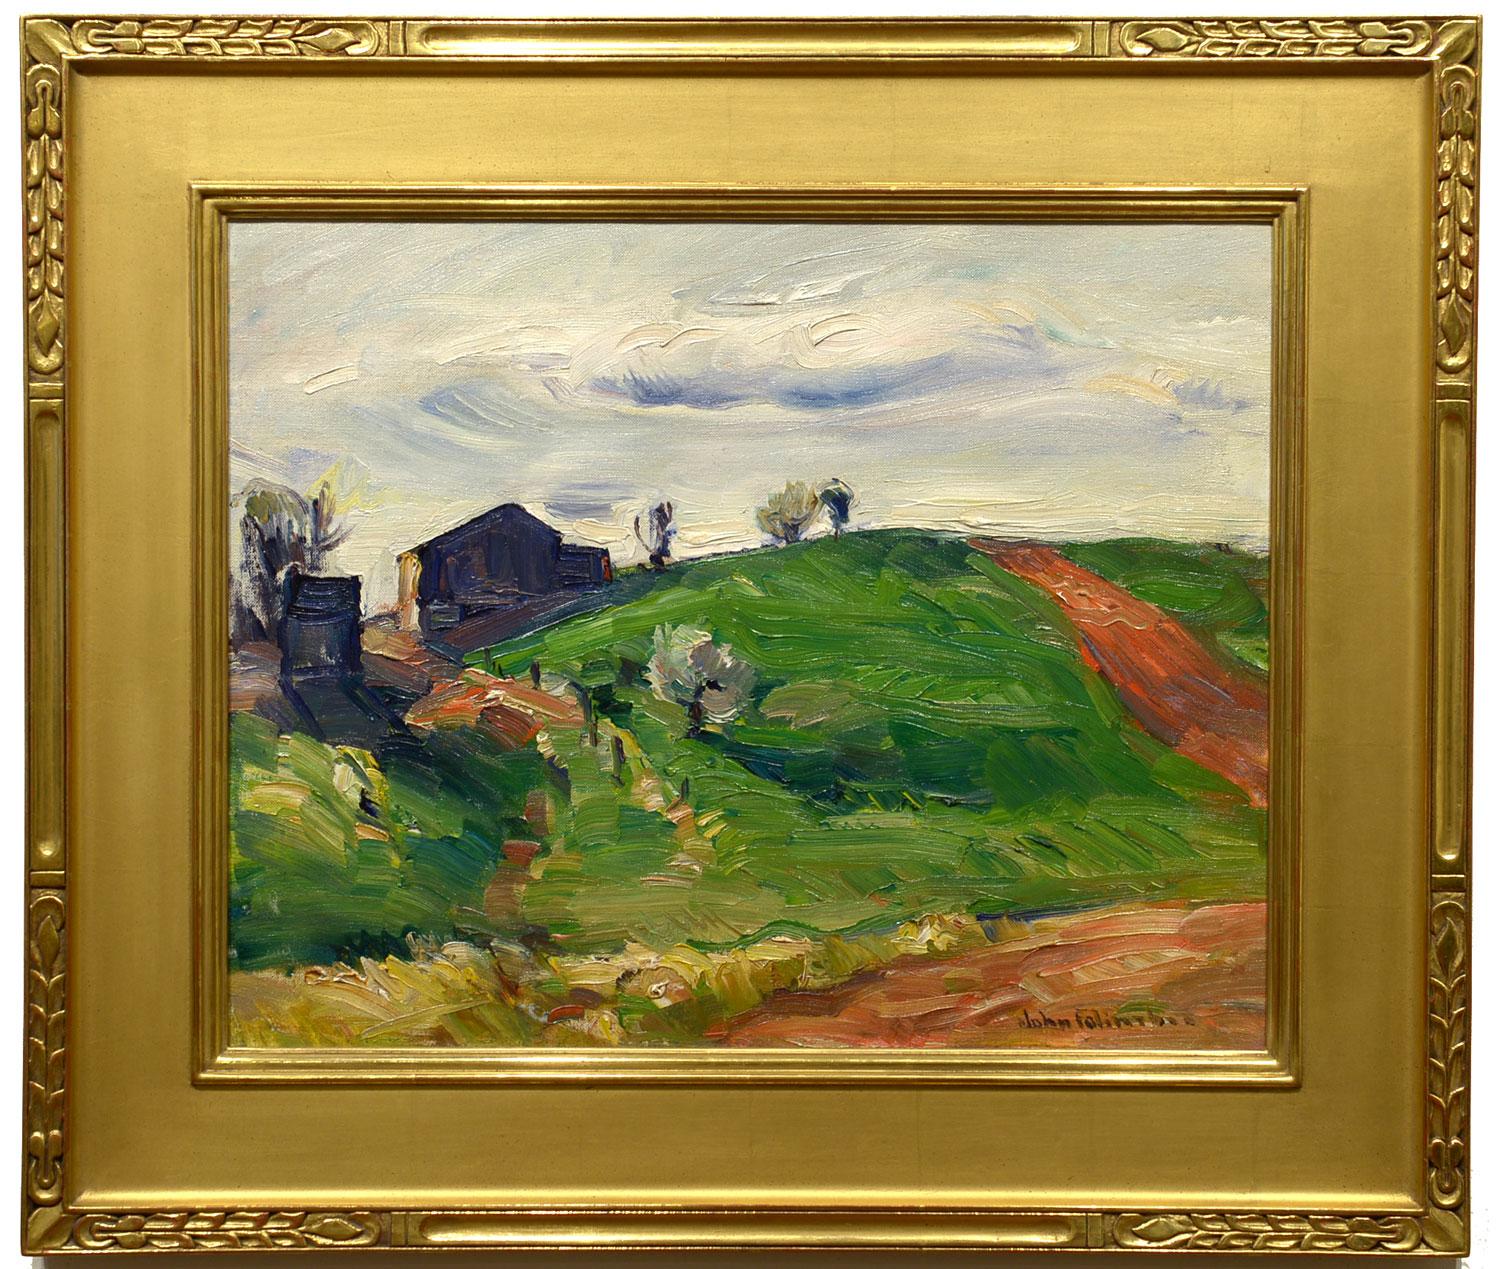 Summer Farm, American Impressionist, Oil, Landscape, New Hope, Pennsylvania - Painting by John Fulton Folinsbee